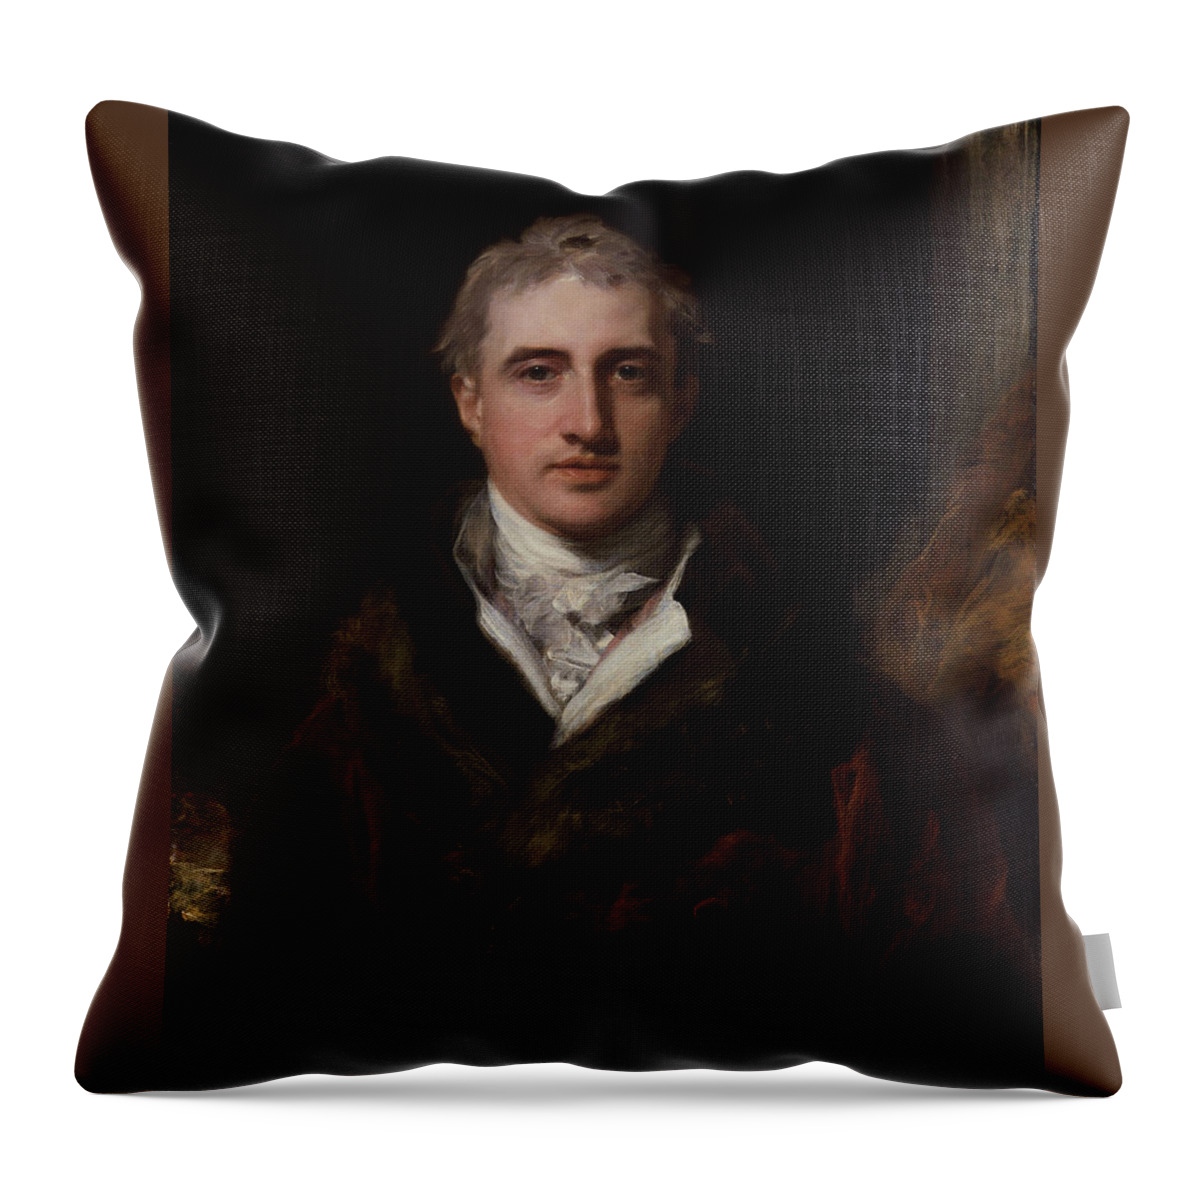 Portrait Of Robert Stewart Throw Pillow featuring the painting Portrait of Robert Stewart by Thomas Lawrence